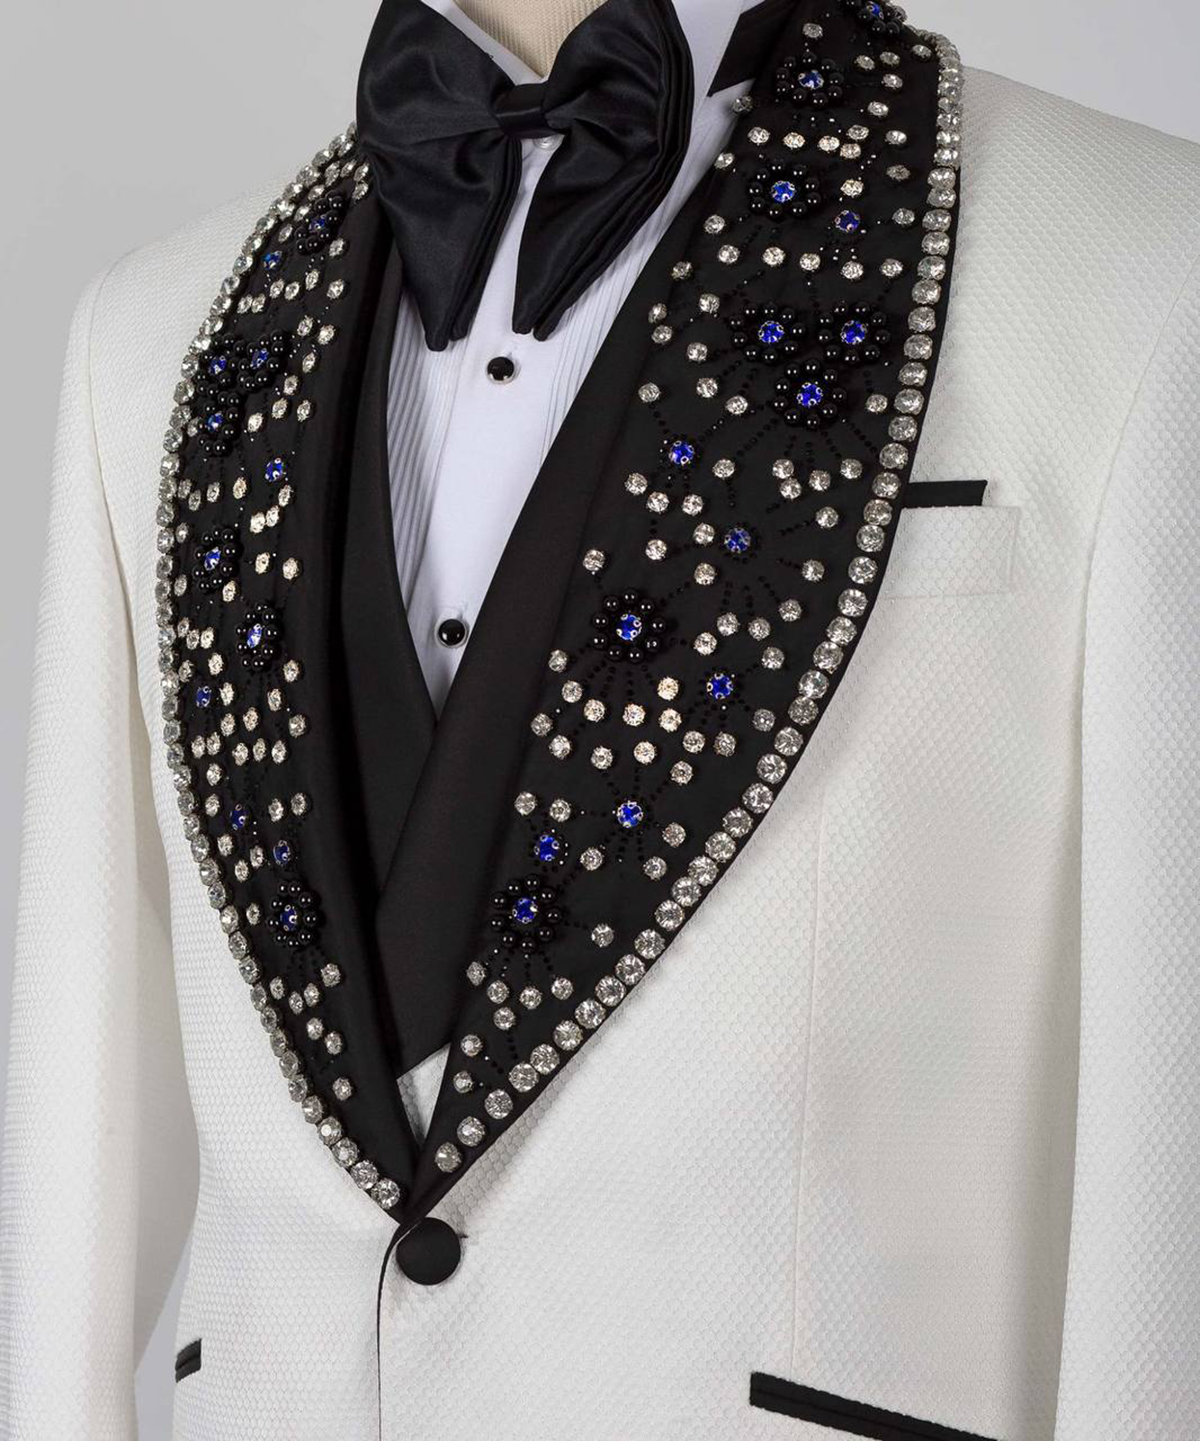 Jaqueta de casamento masculina de luxo xale lapela slim fit ternos para contas de cristal masculinas 2 peças casaco colete feito sob encomenda